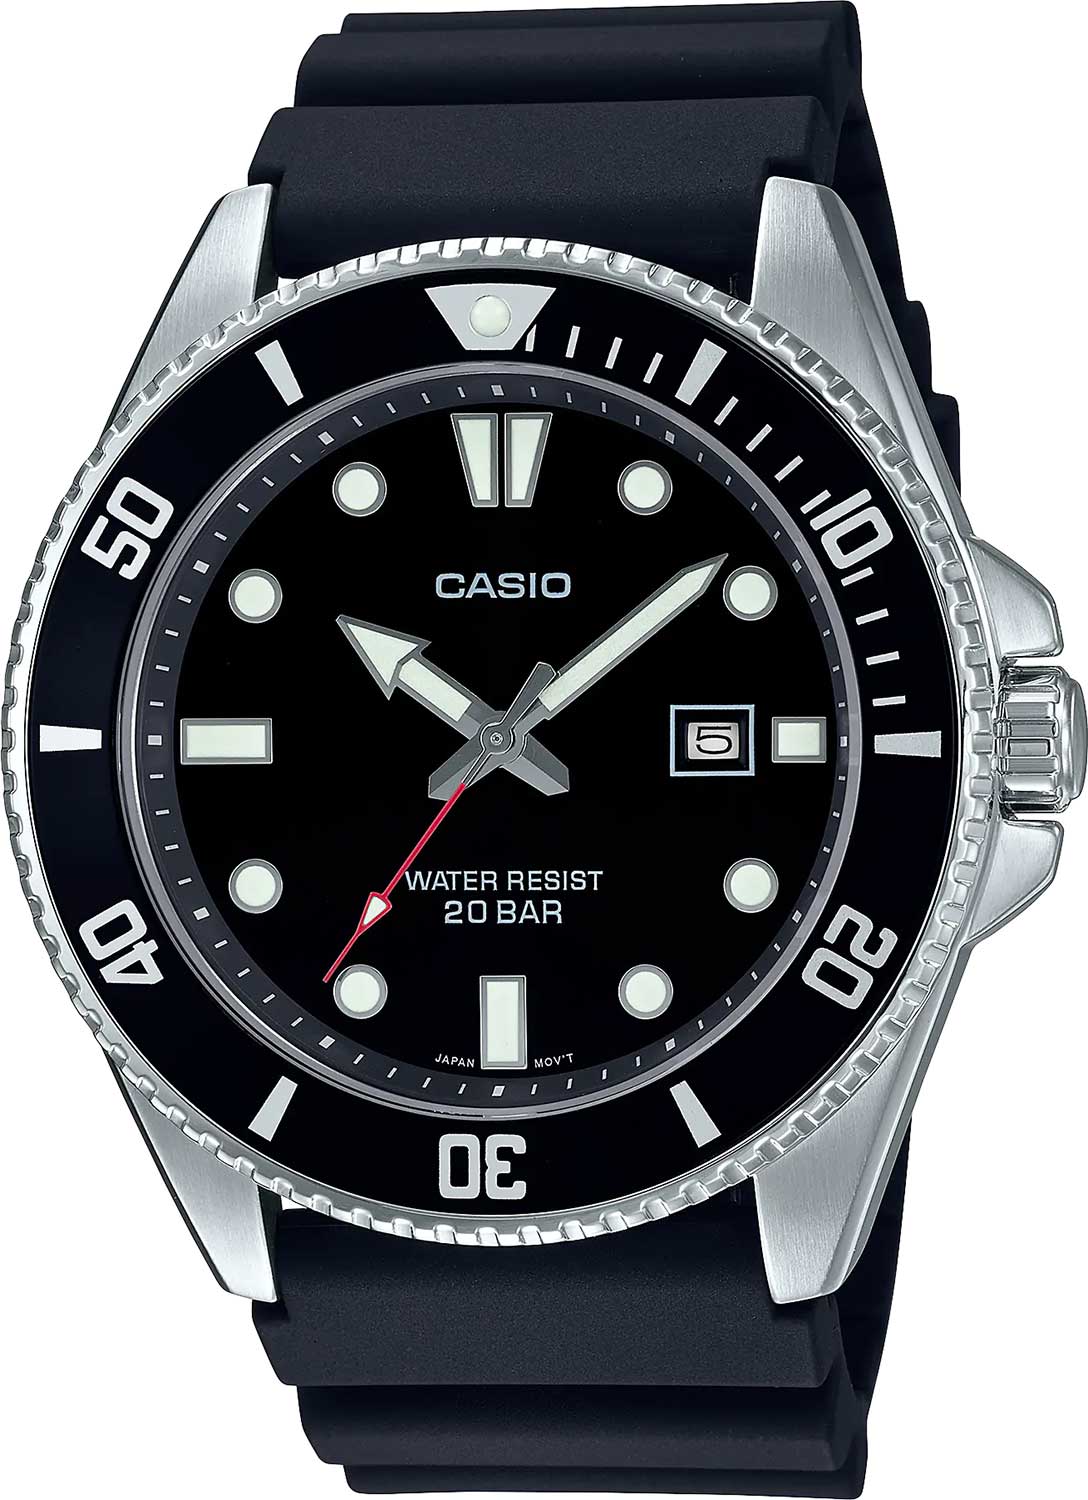    Casio Collection MDV-107-1A1VEF